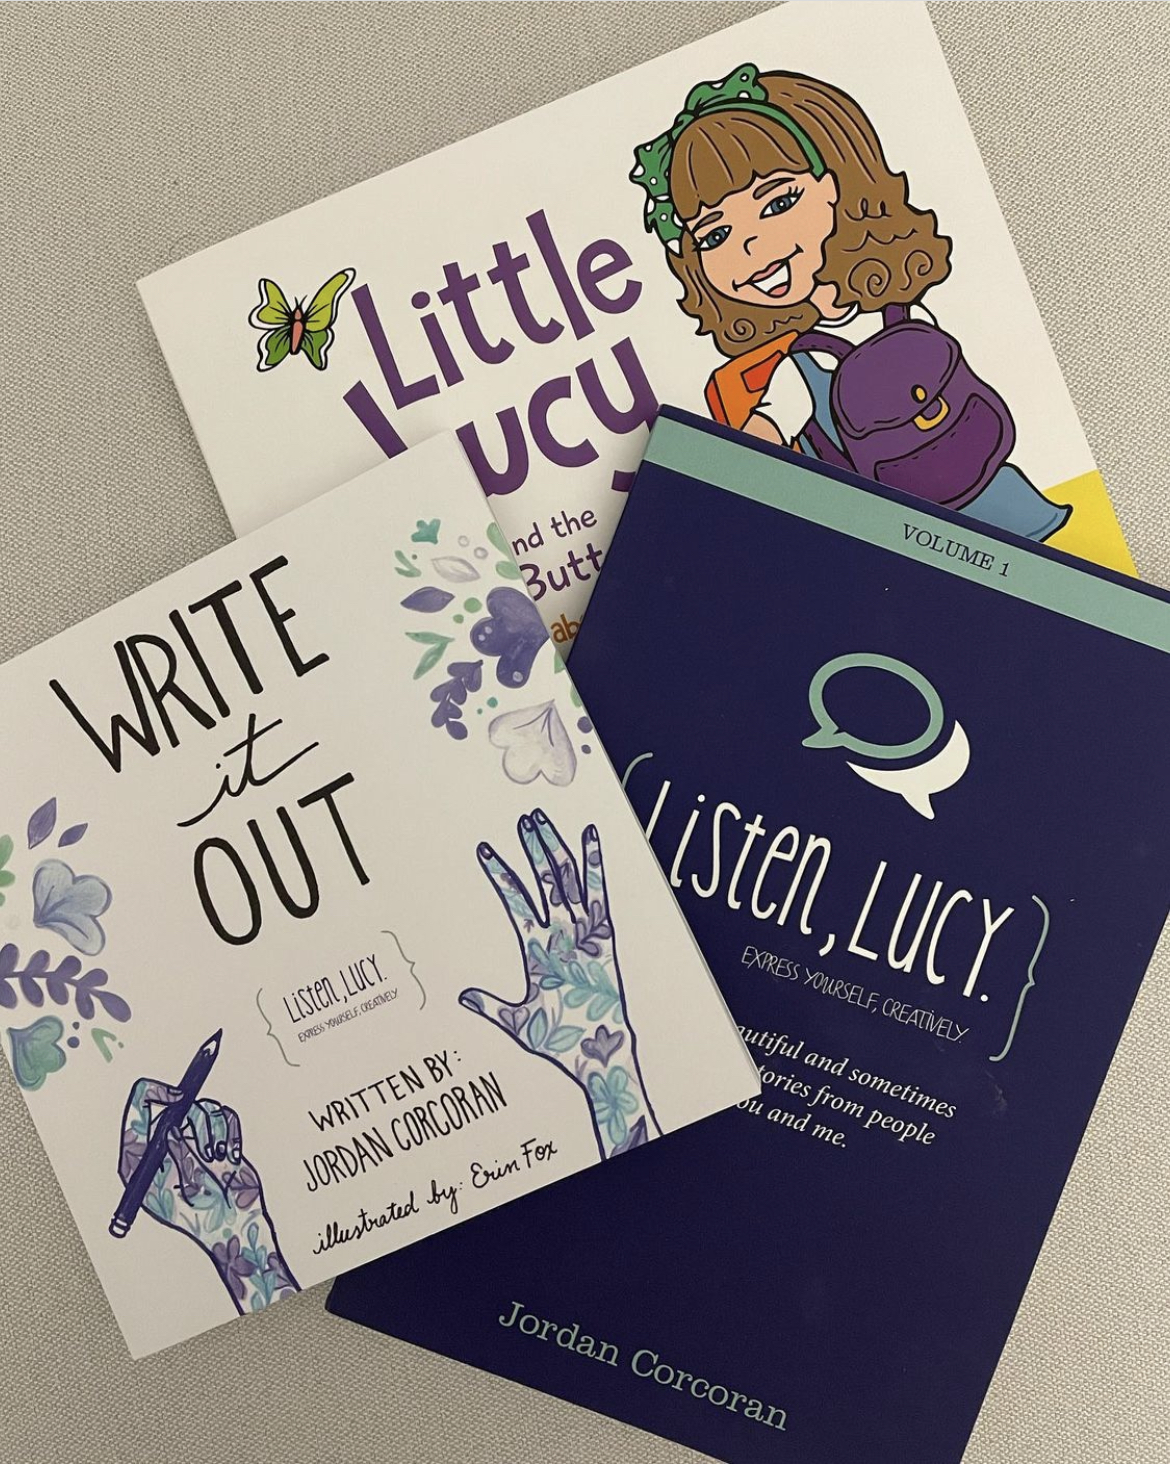 'Listen, Lucy' books by Jordan Corcoran